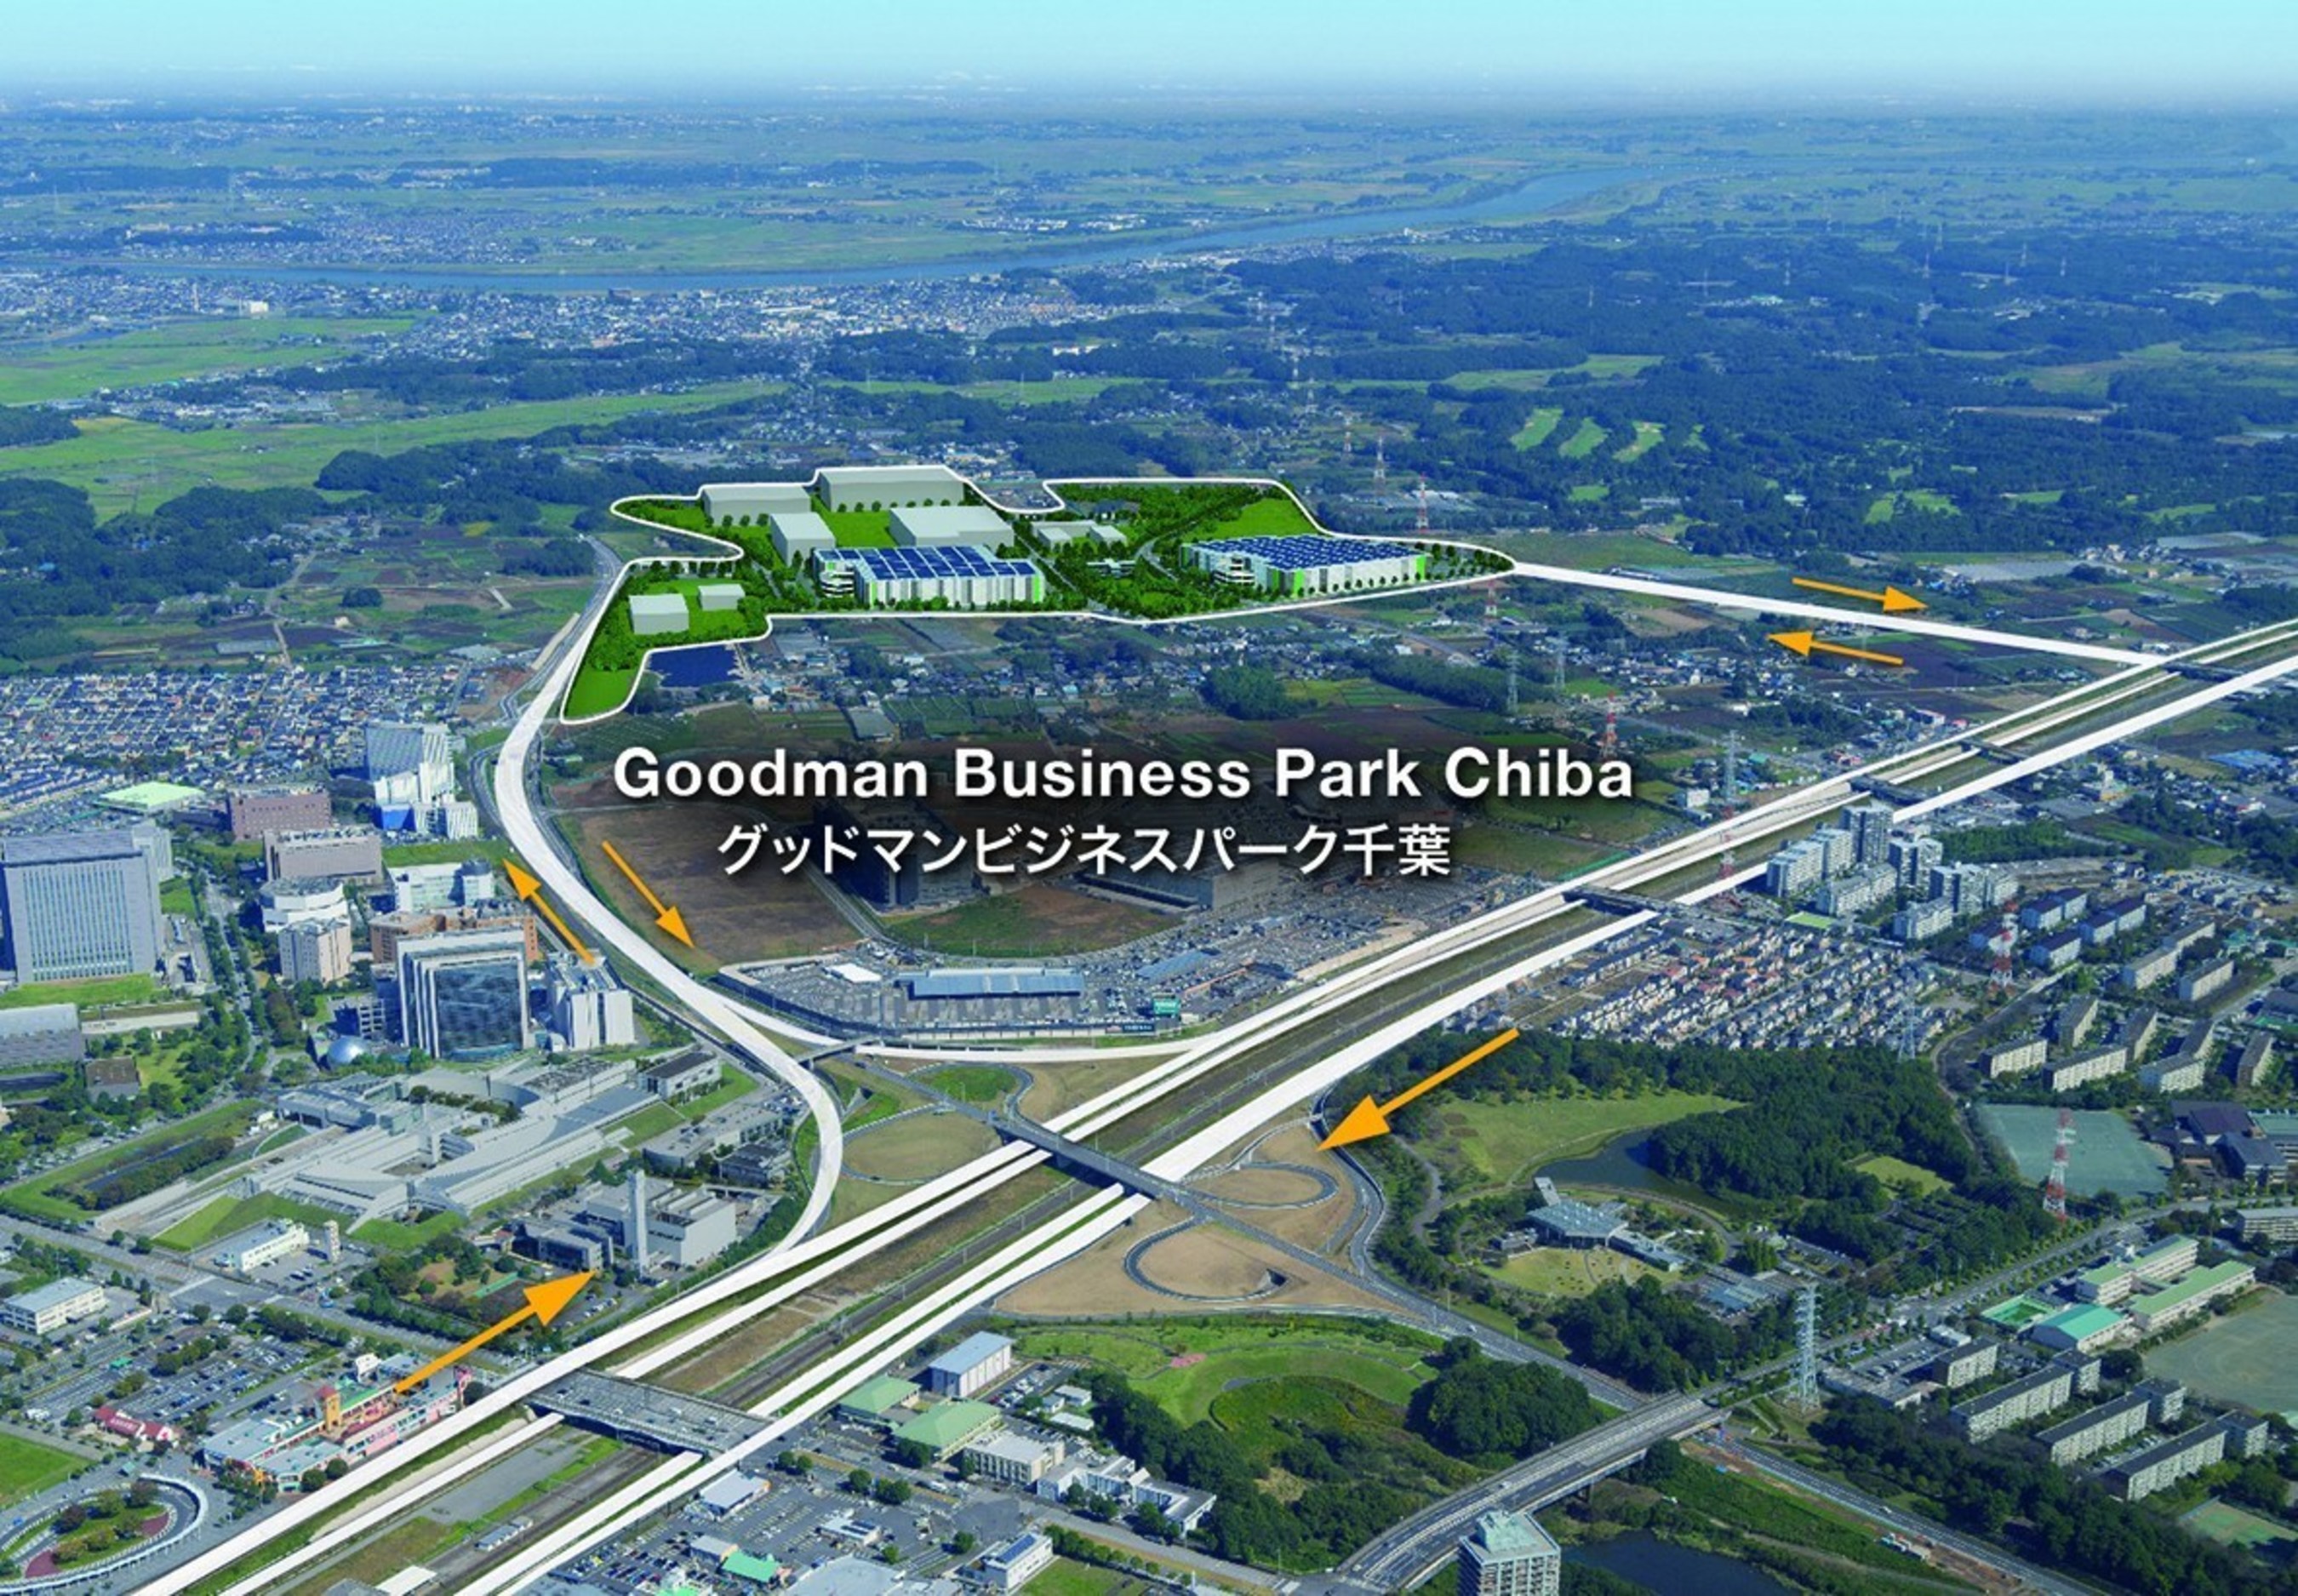 Goodman launches its Goodman Business Park Chiba, Japan